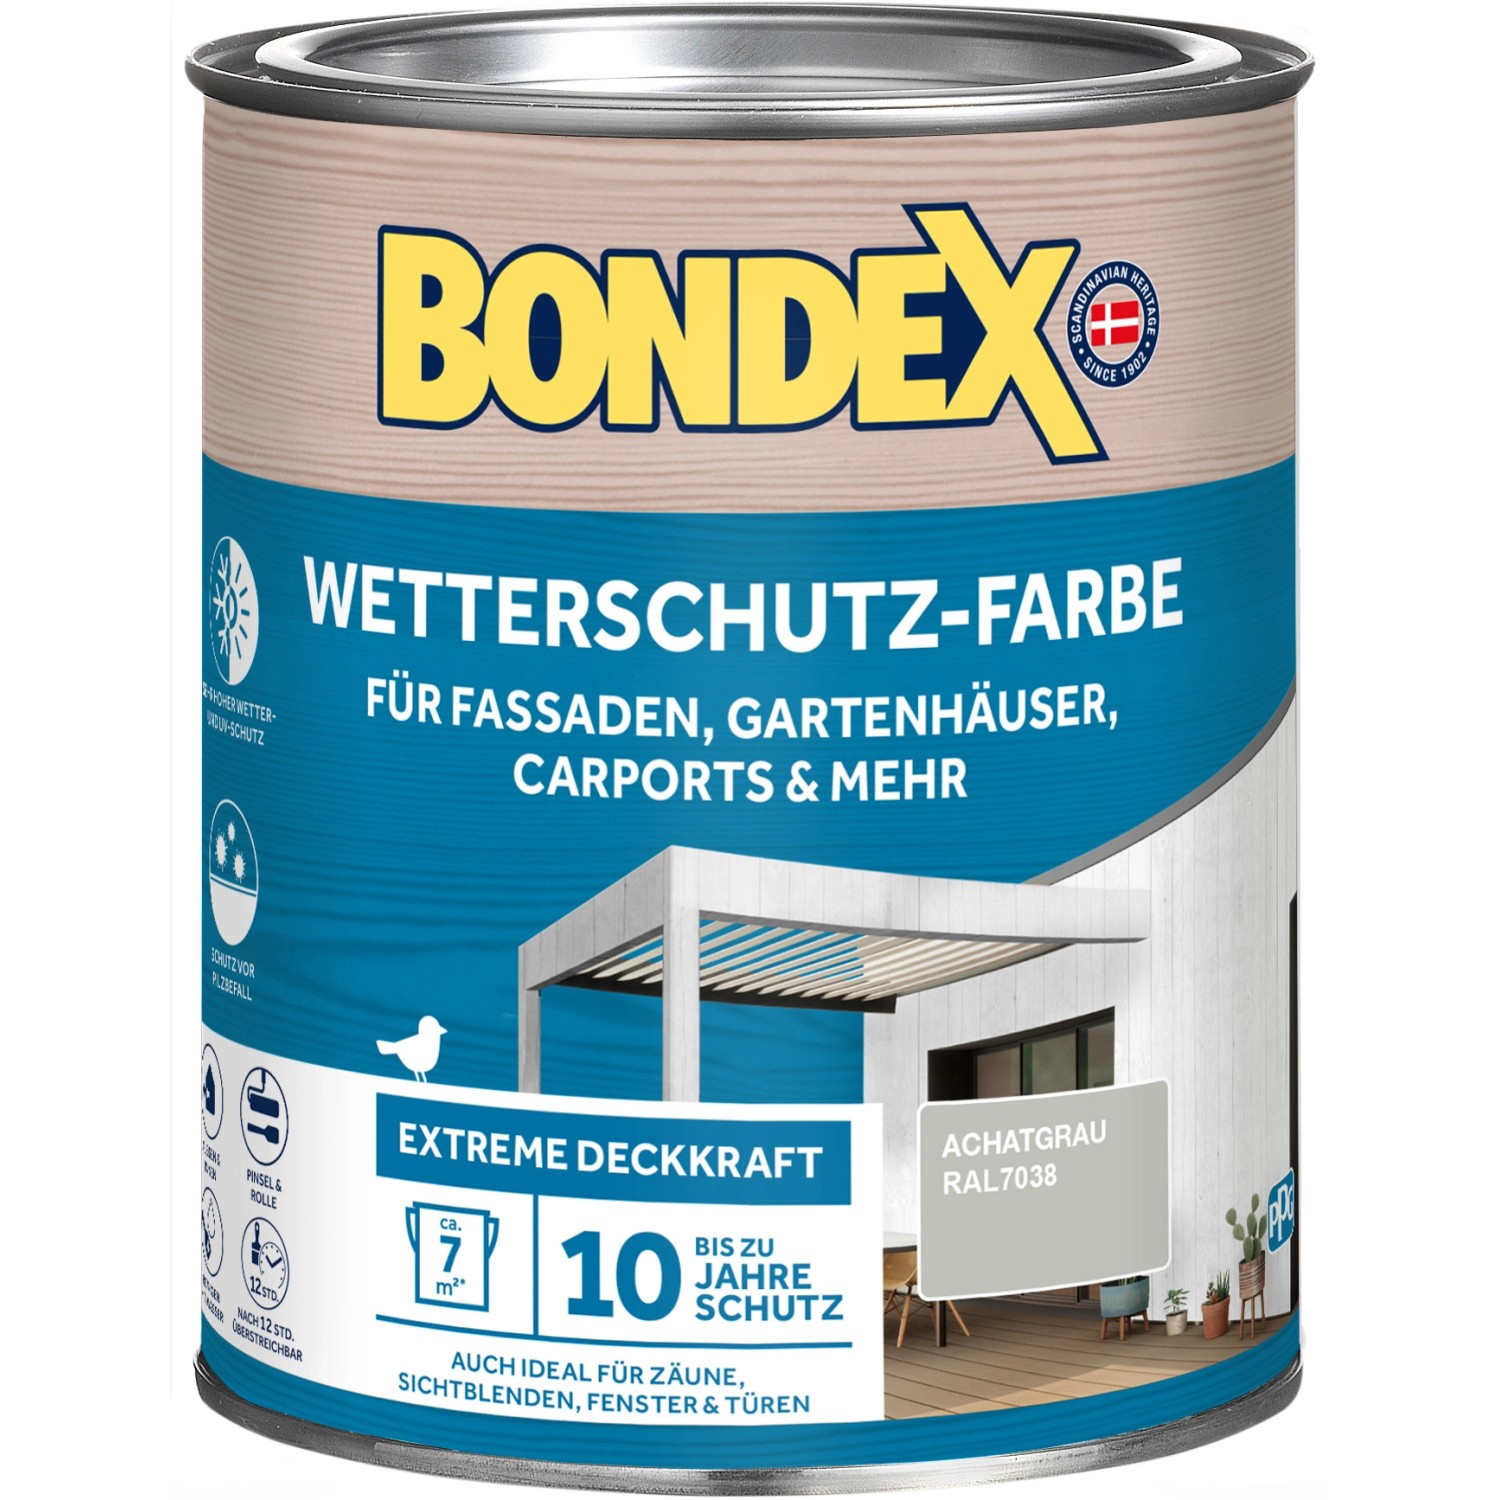 Bondex Wetterschutz-Farbe RAL 7038 Achatgrau 750 ml